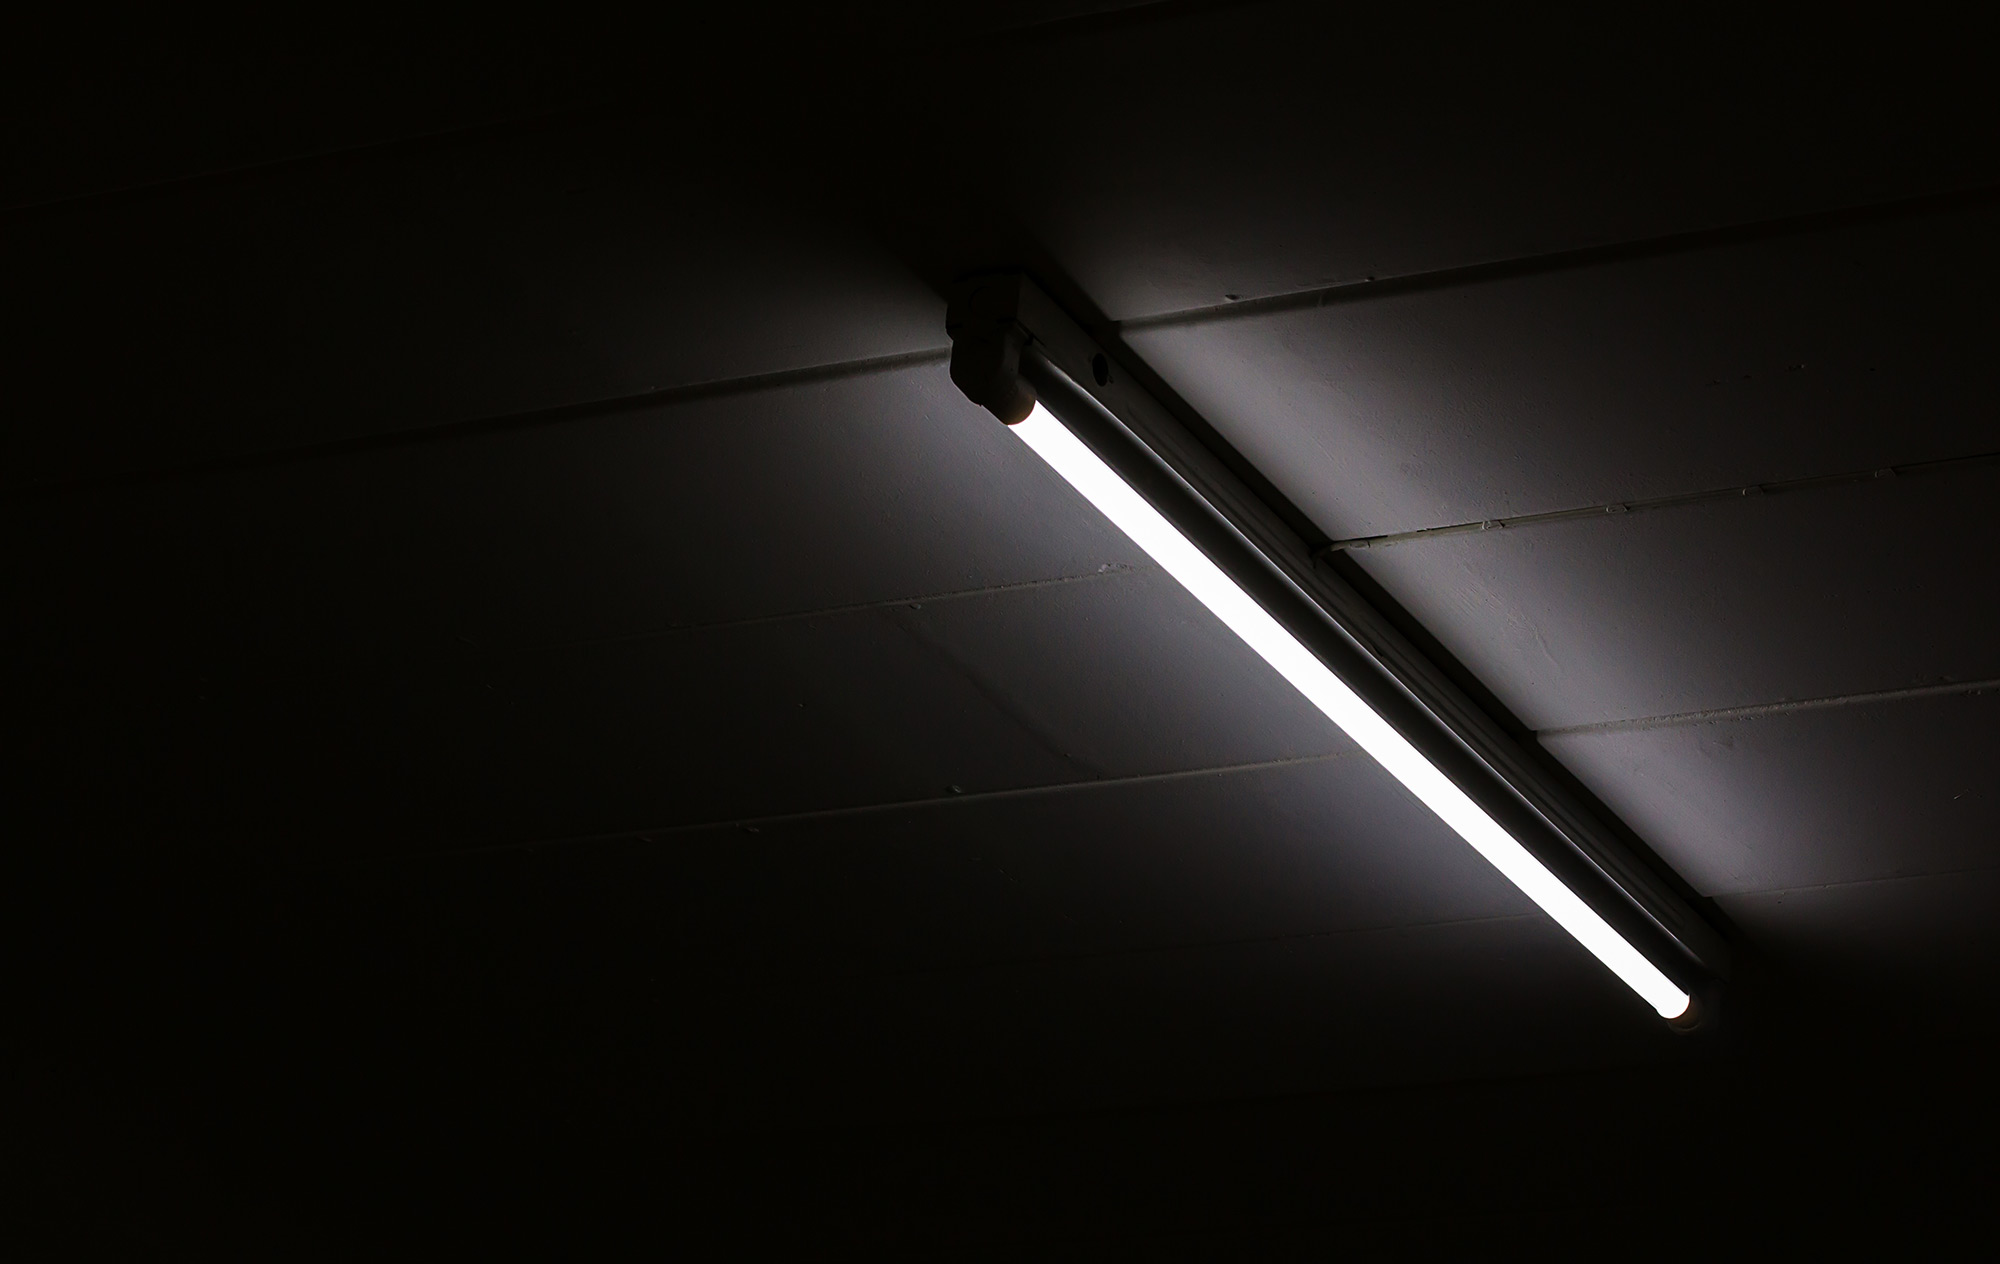 https://www.lightzoomlumiere.fr/wp-content/uploads/2022/08/Tube-fluorescent-allumee-luminescent-en-applique-plafond-Copyright-Rutchapong-iStock.jpg